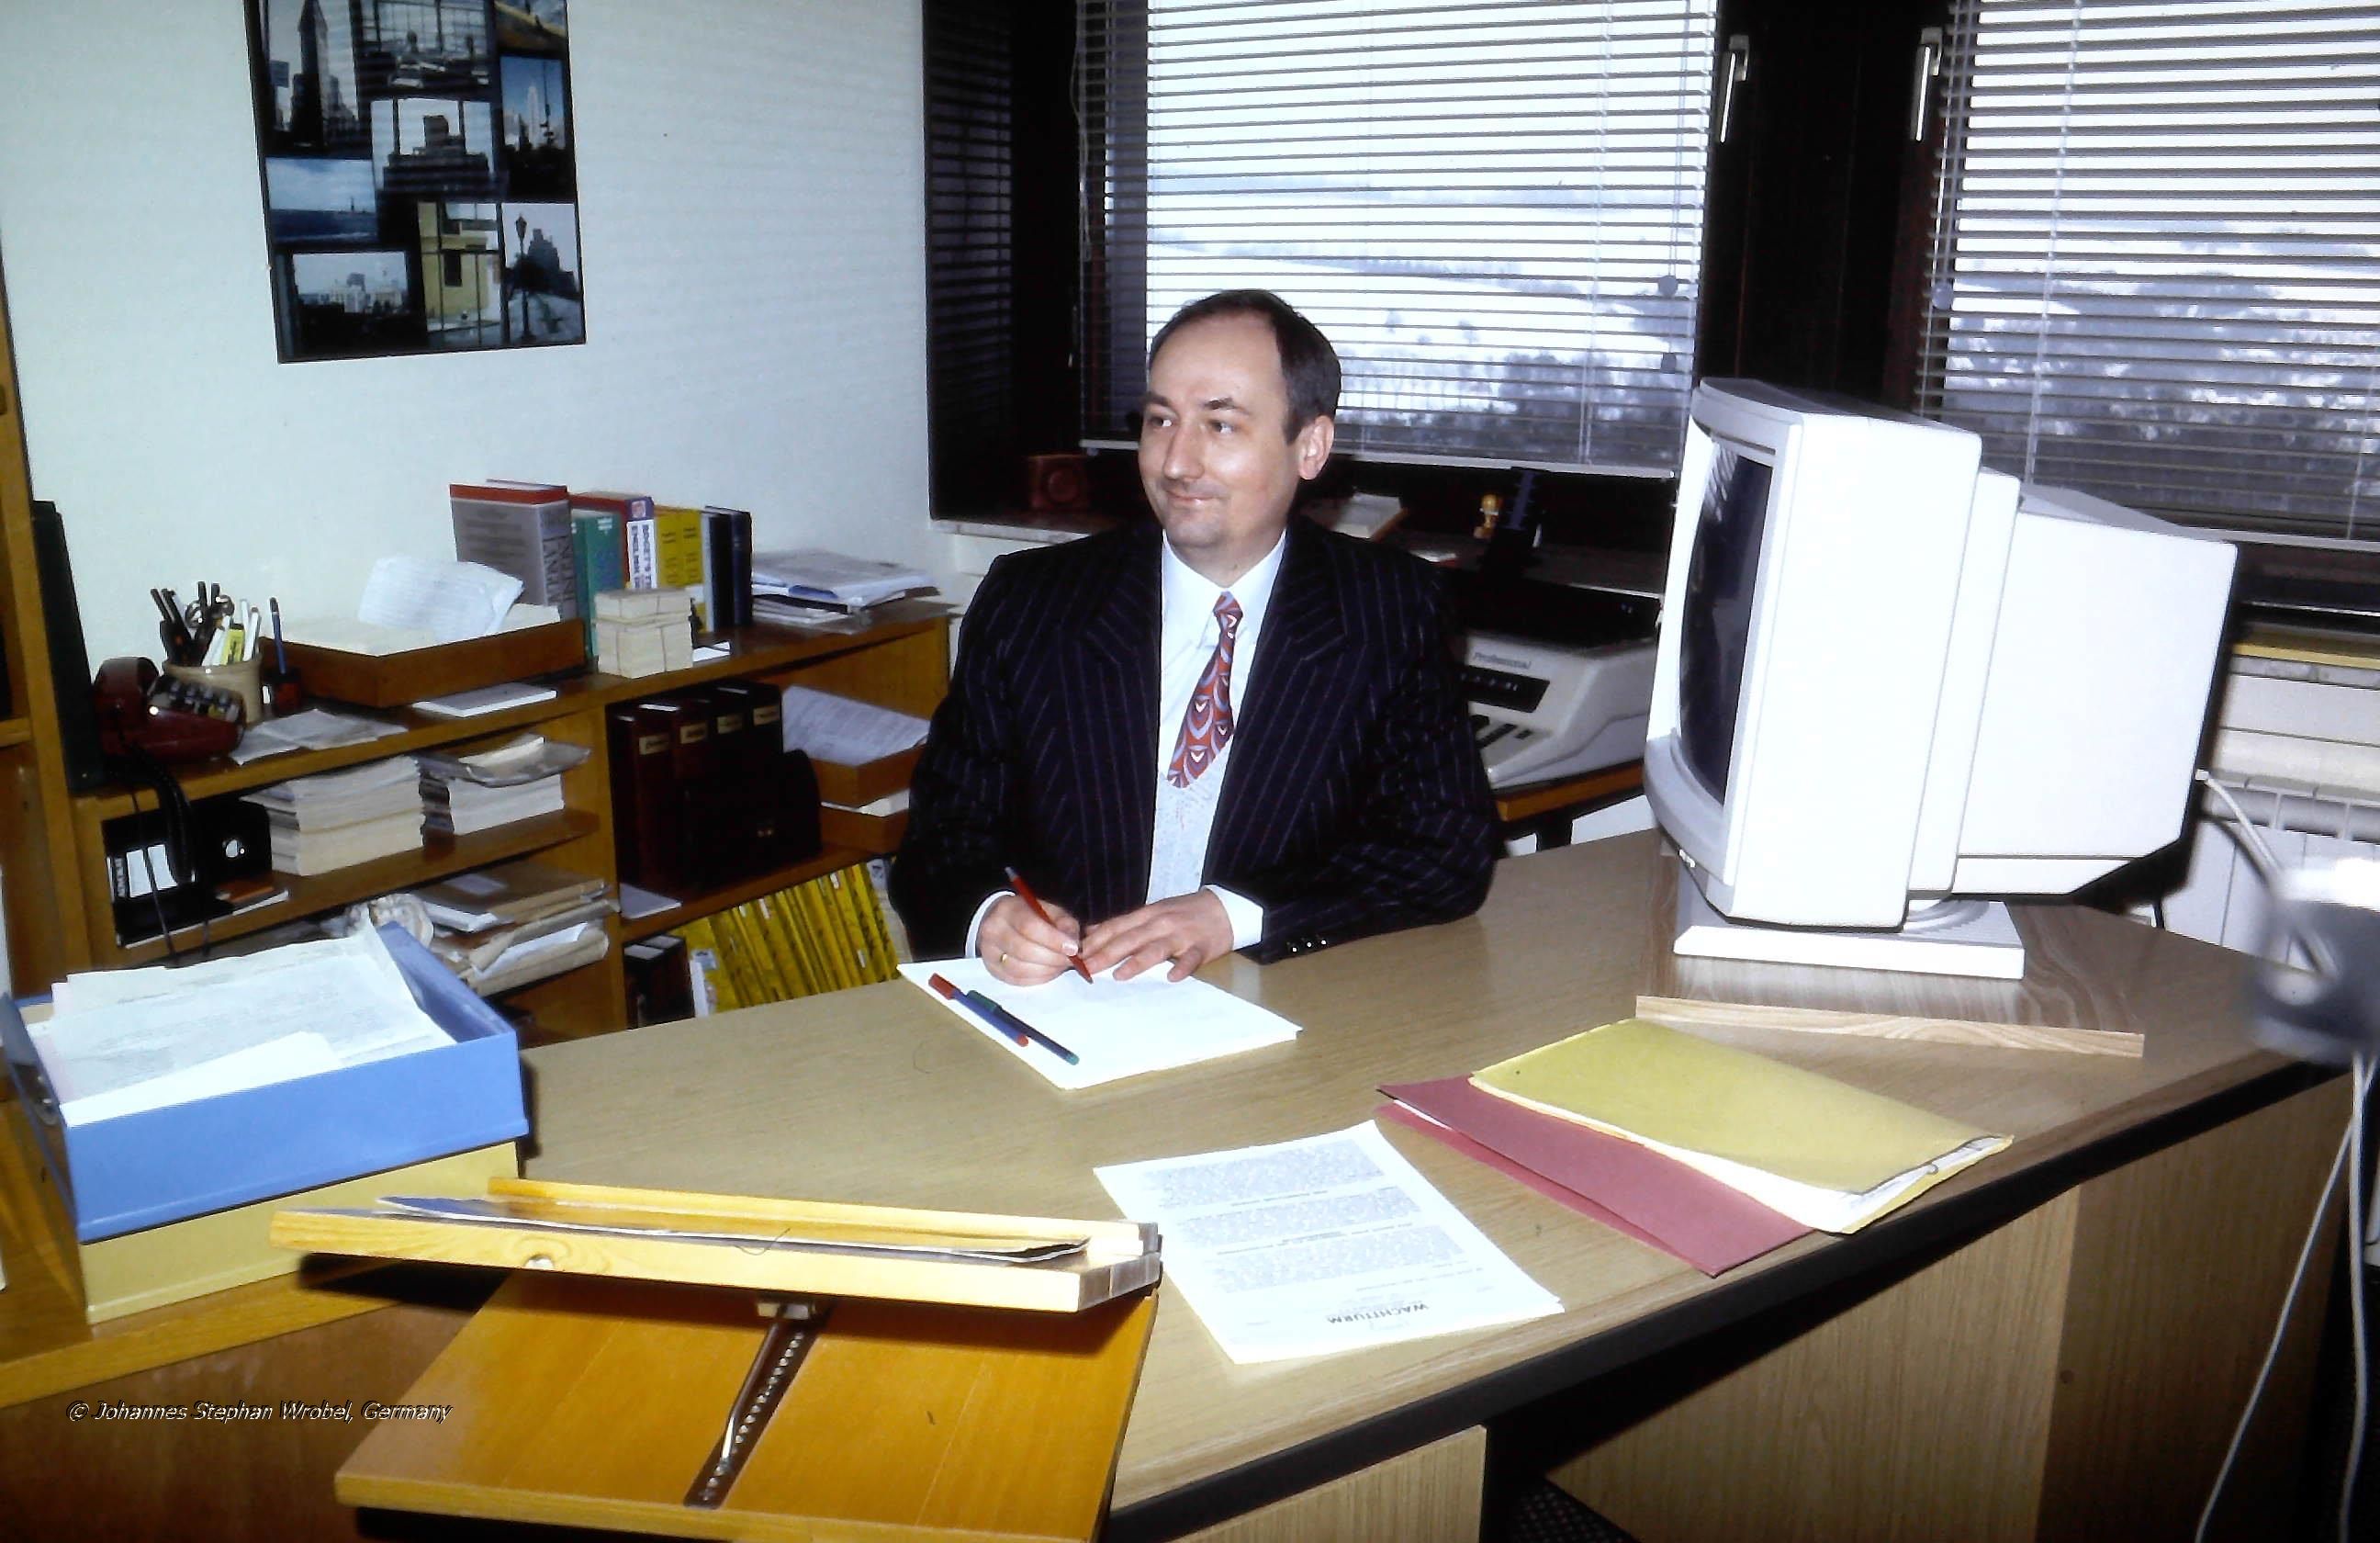 Redaktion, Selters/Taunus, 1991